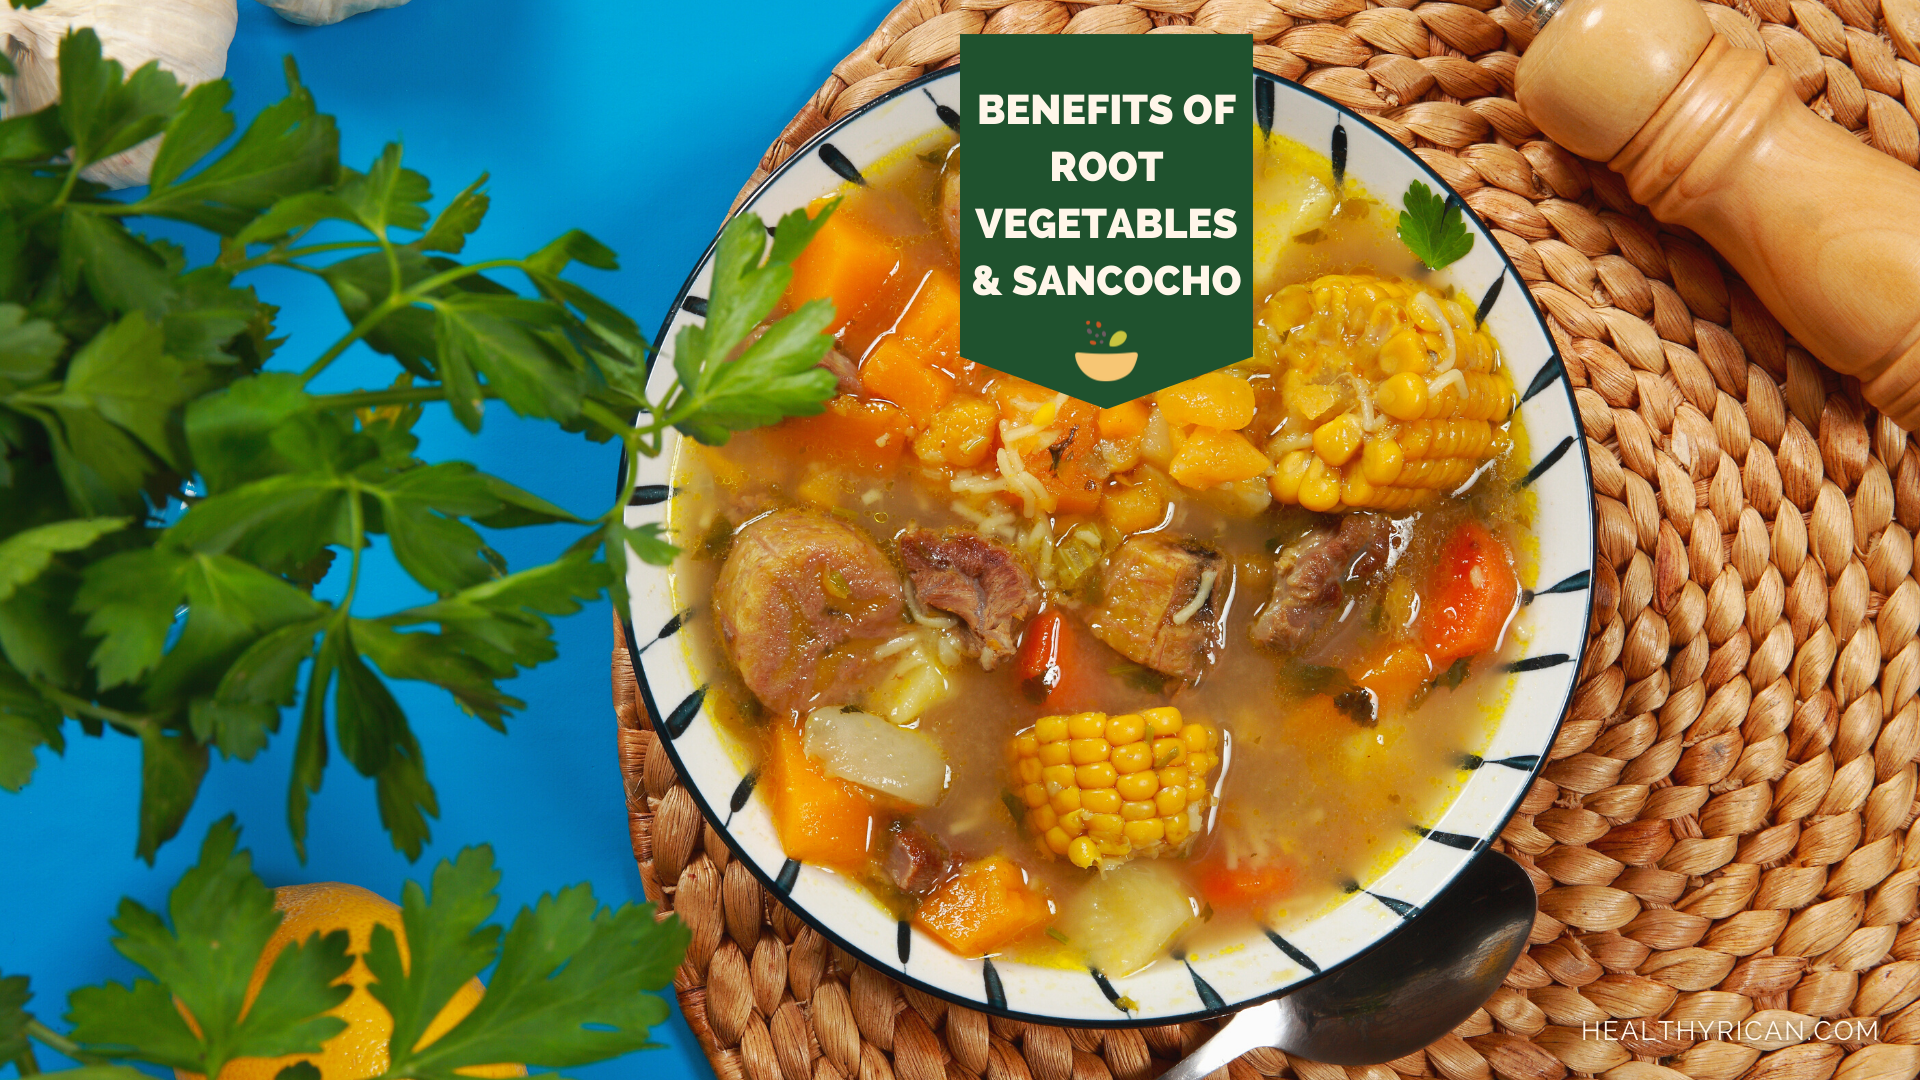 Health Benefits of Root Vegetables +Recipes: Sancocho - Healthy Rican